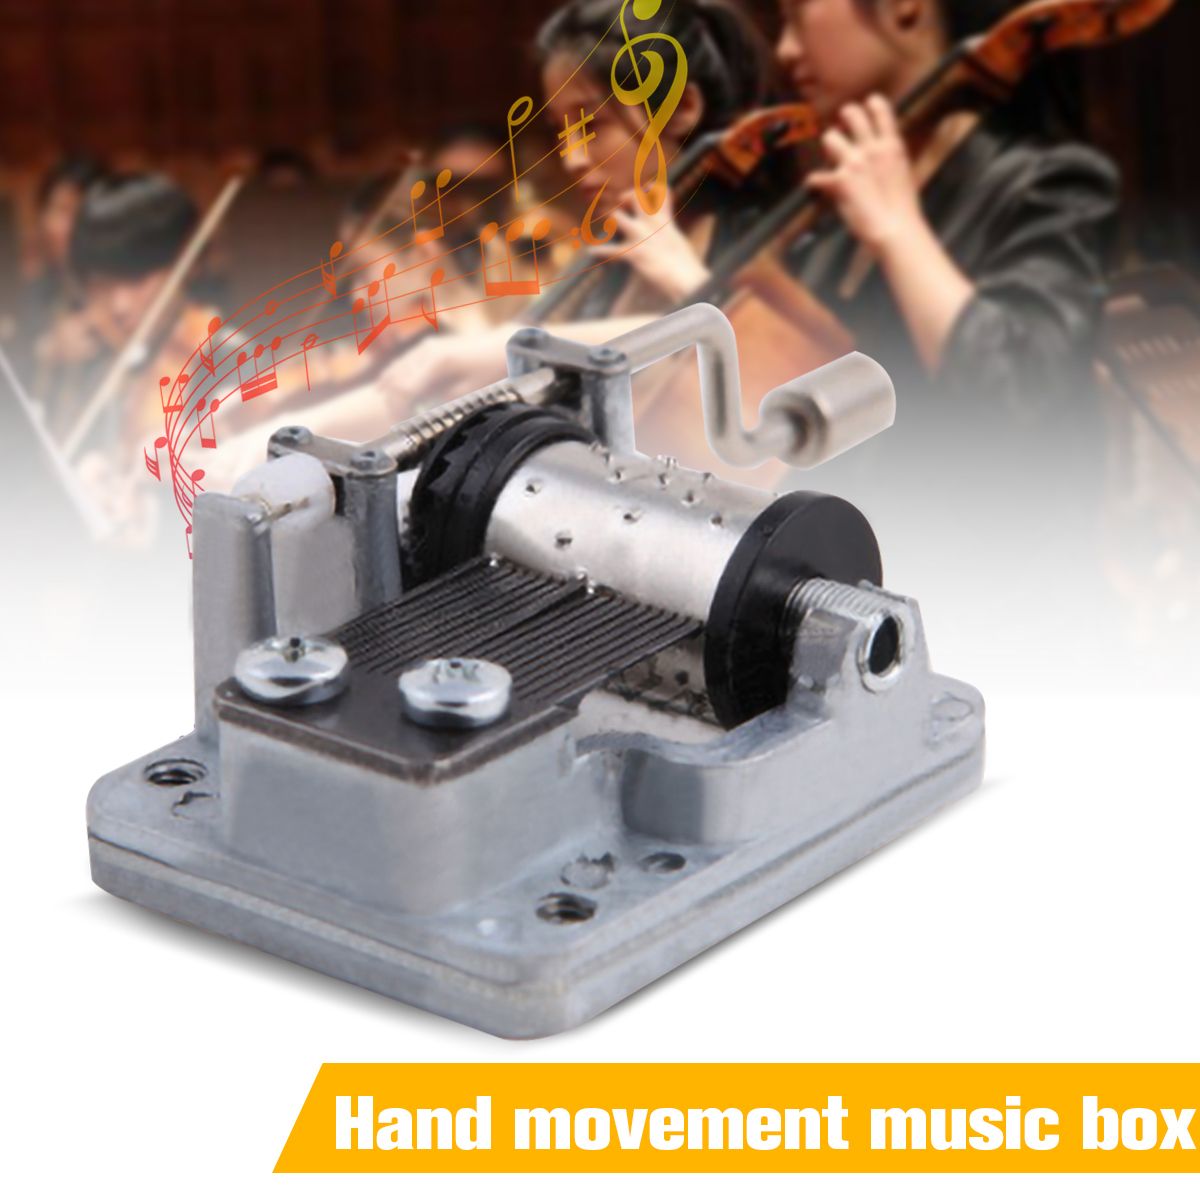 Vintage-Music-Box-Hand-Movement-Decor-Music-Bell-Toys-Xmas-Gift-Birthday-Present-1554261